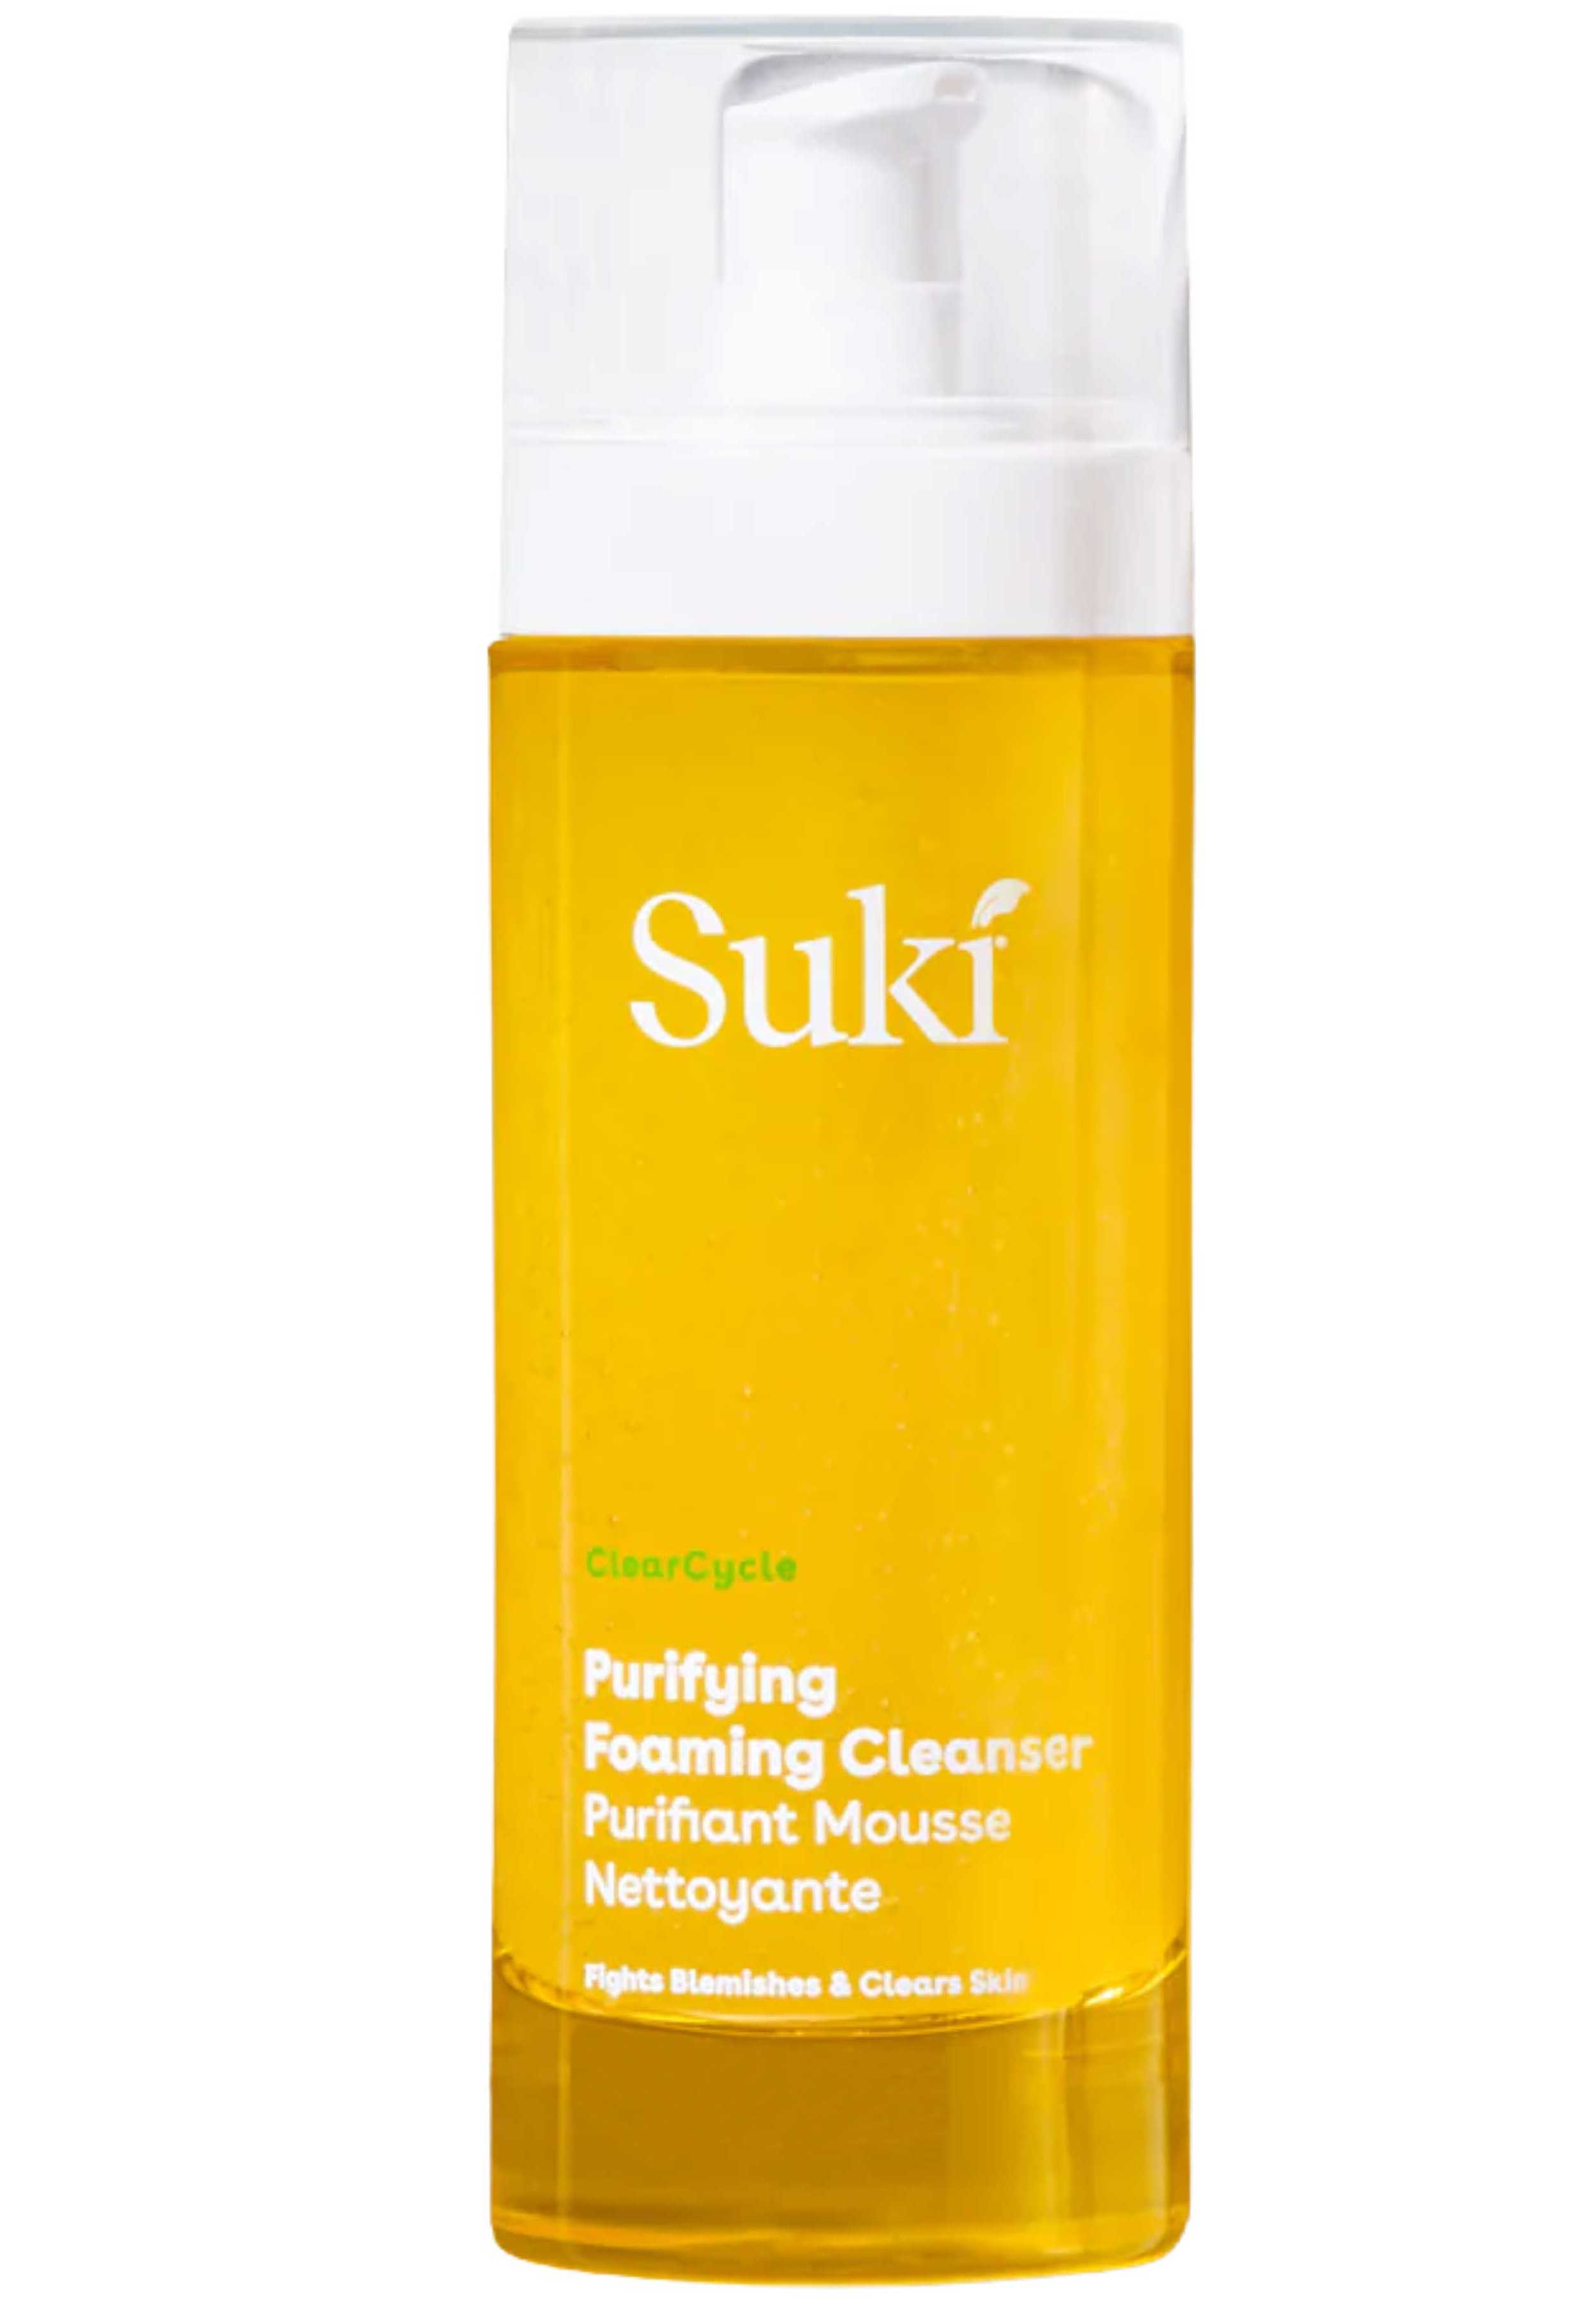 Suki Purifying Foaming Cleanser